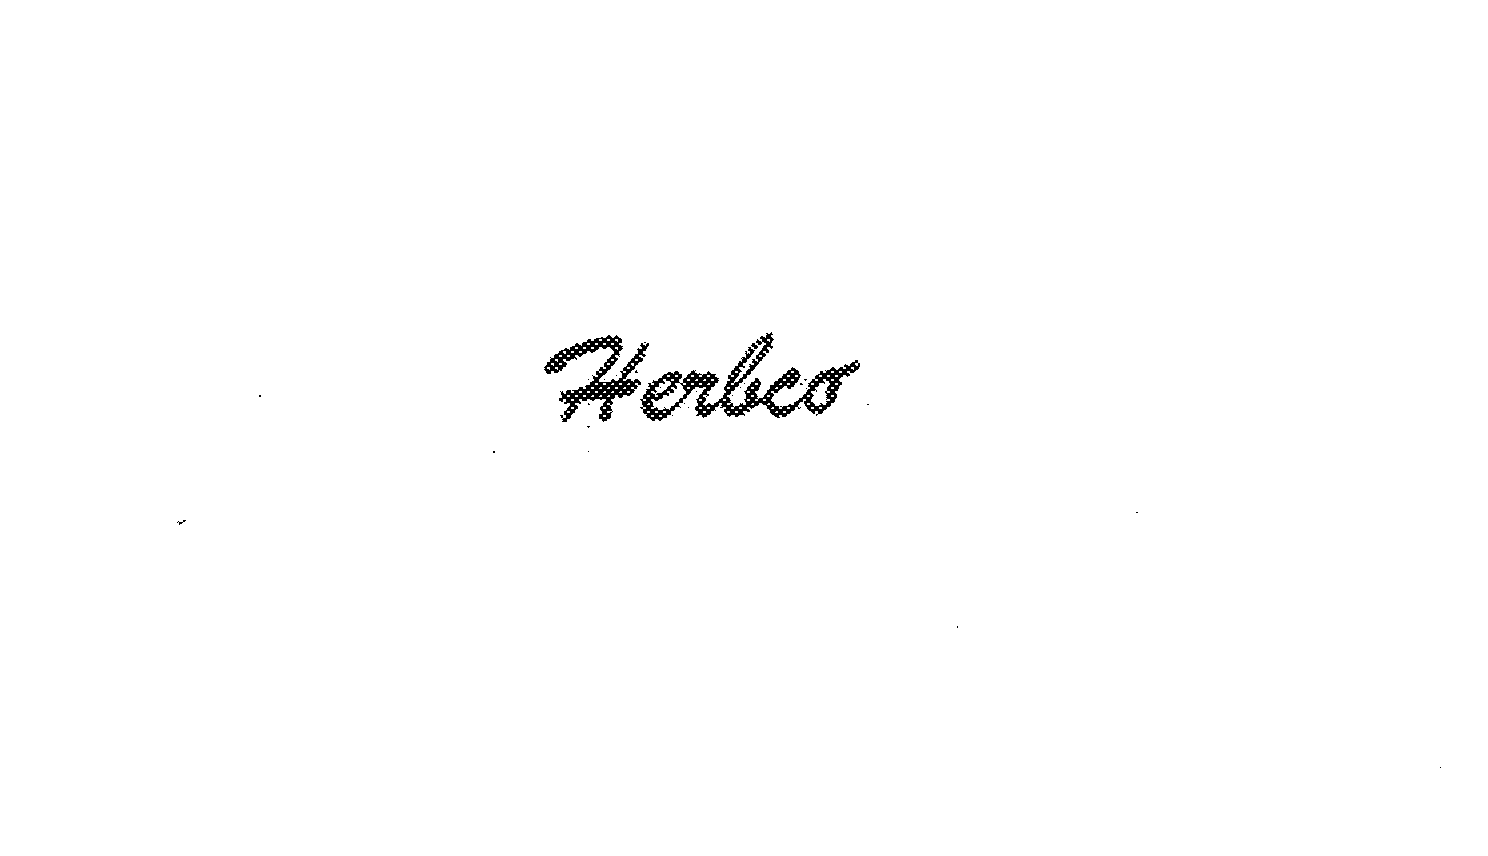 Trademark Logo HERBCO